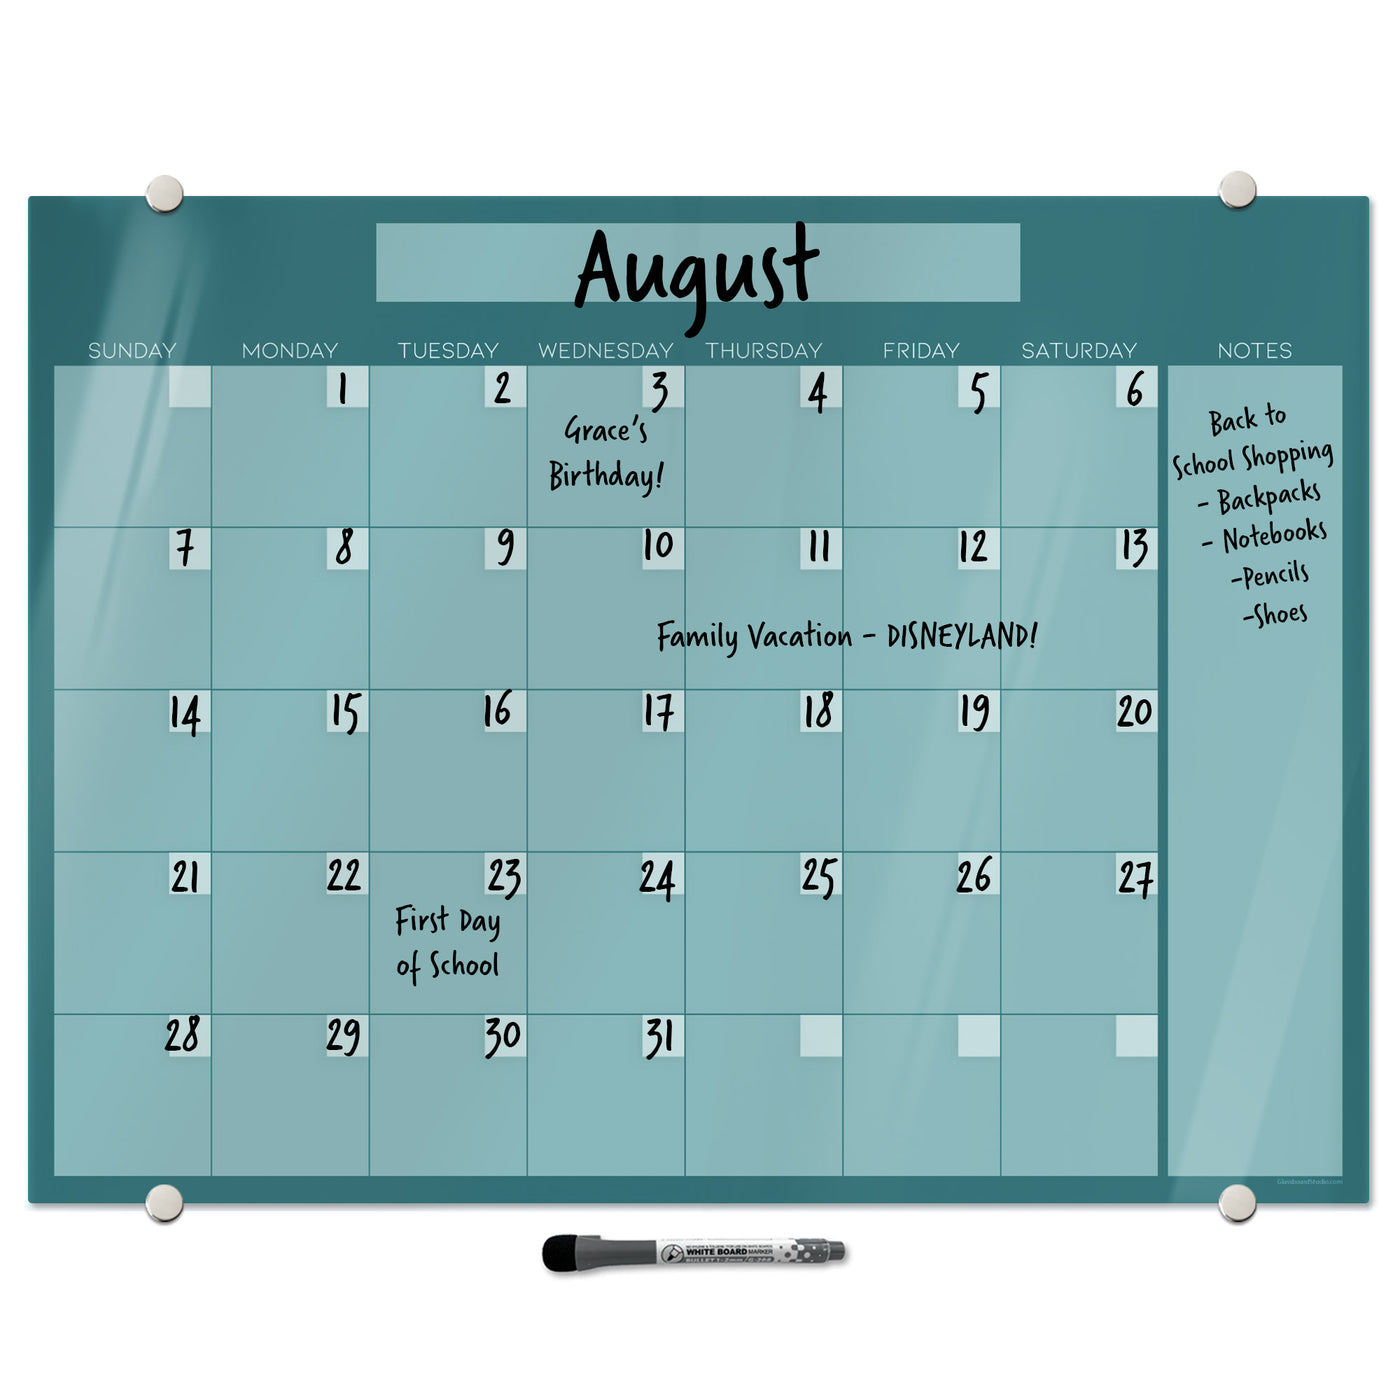 Teal Calendar Glassboard